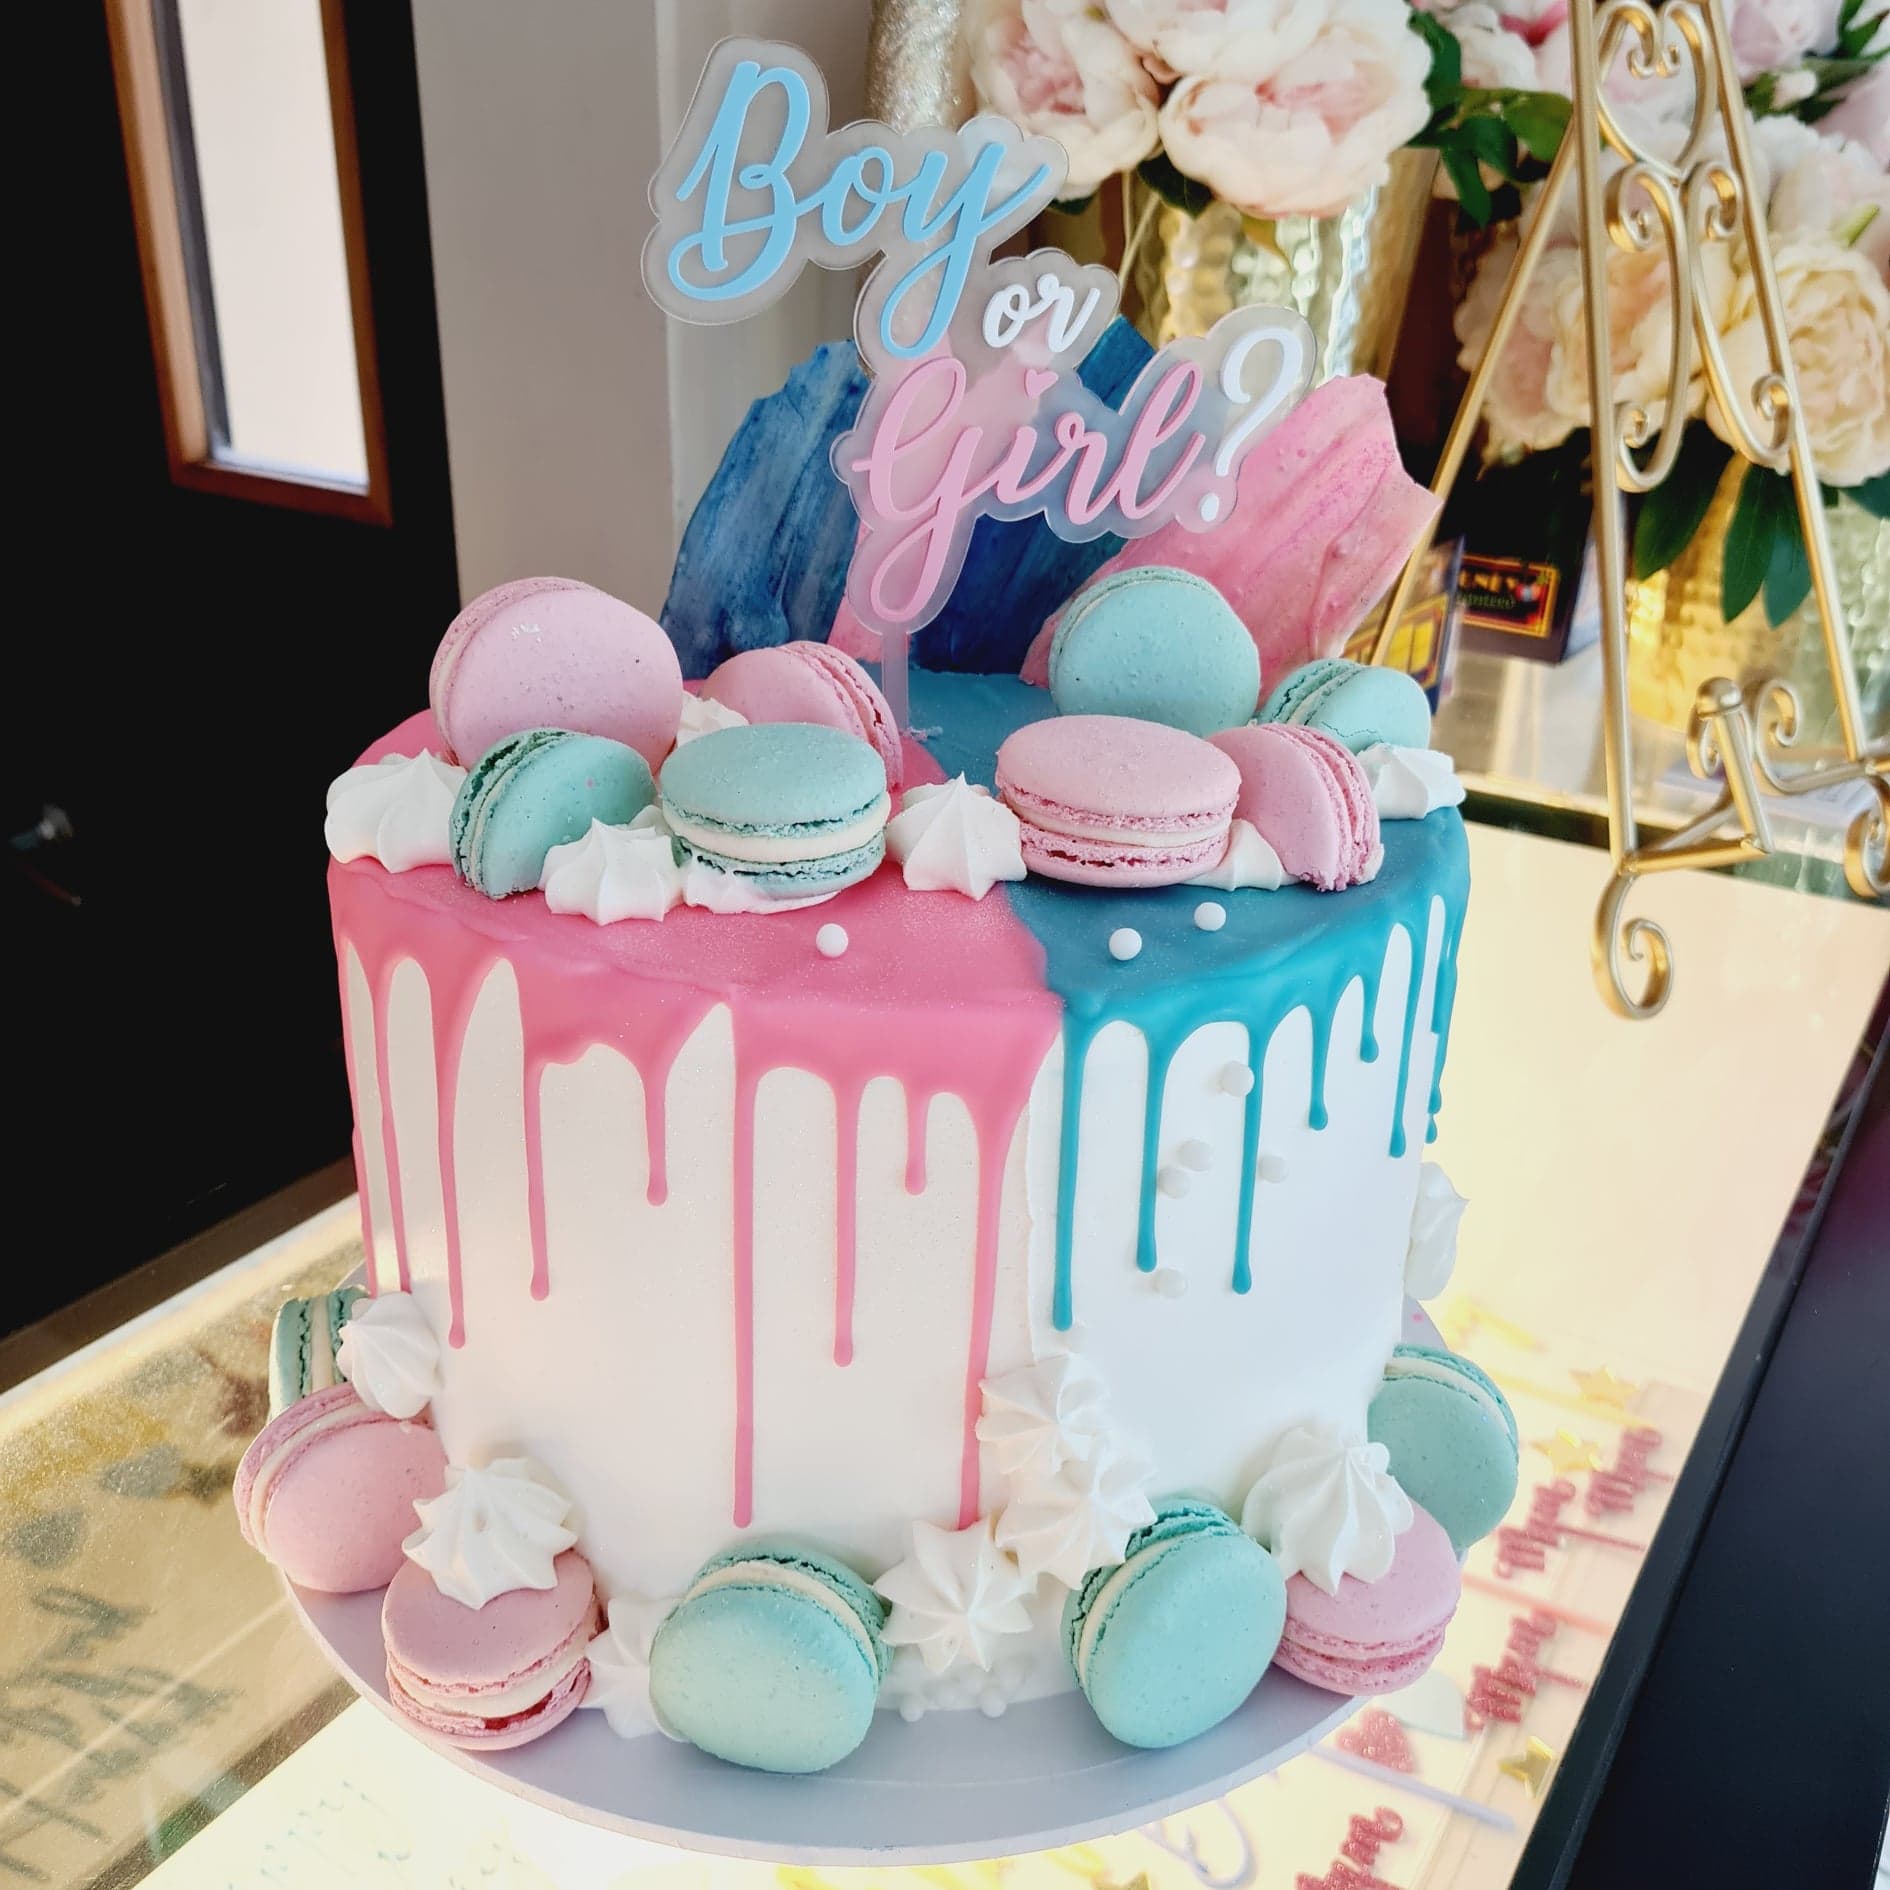 Share 81+ boy girl birthday cake latest - awesomeenglish.edu.vn